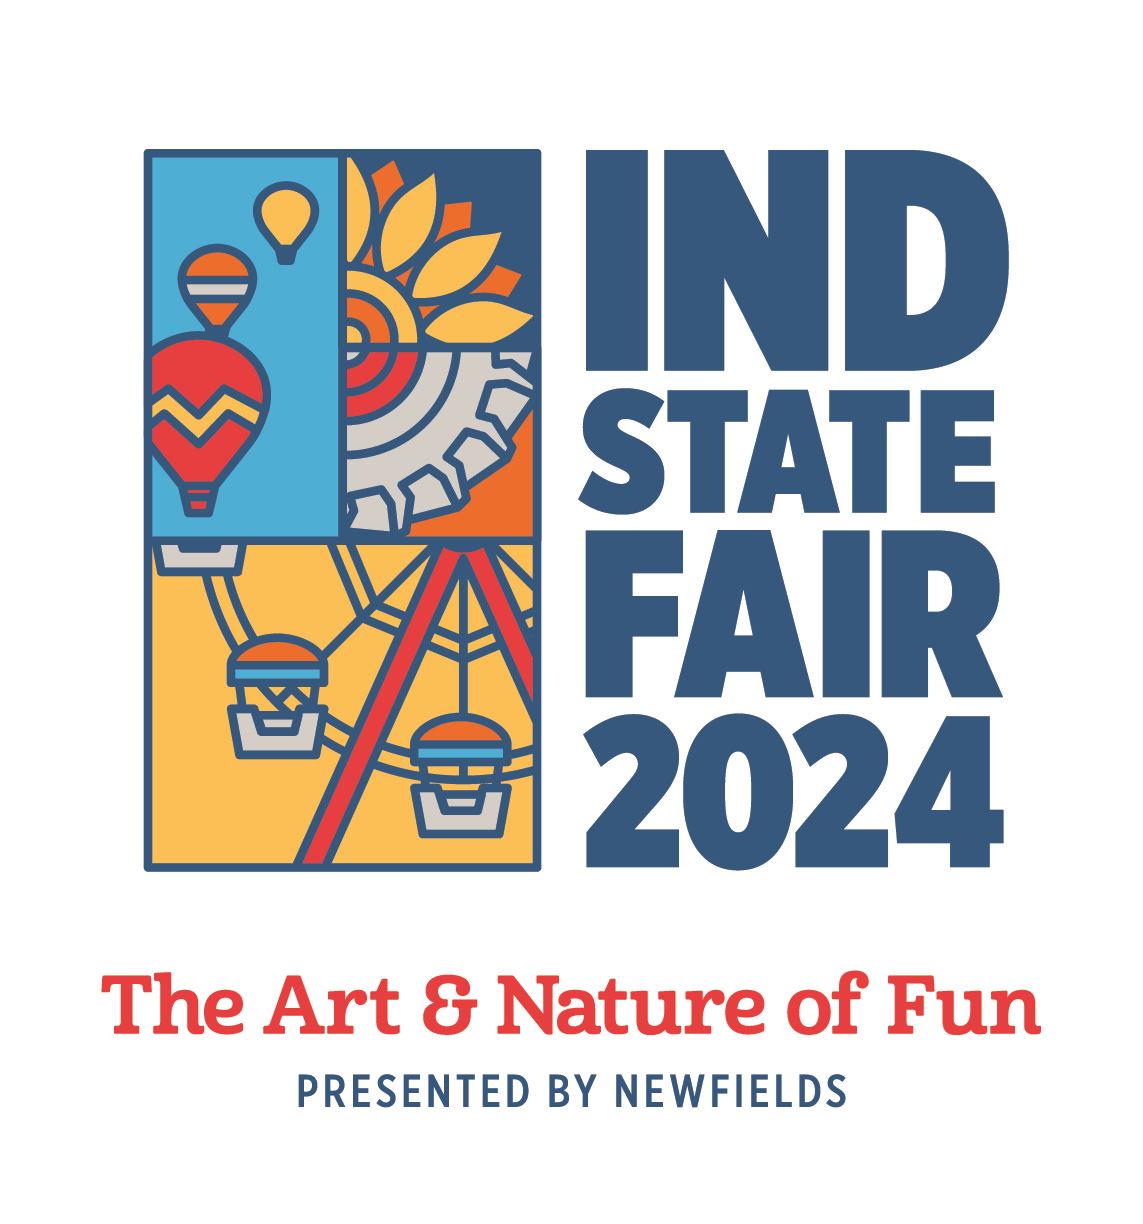 Indianapolis State Fair 2024 Experiences Await!